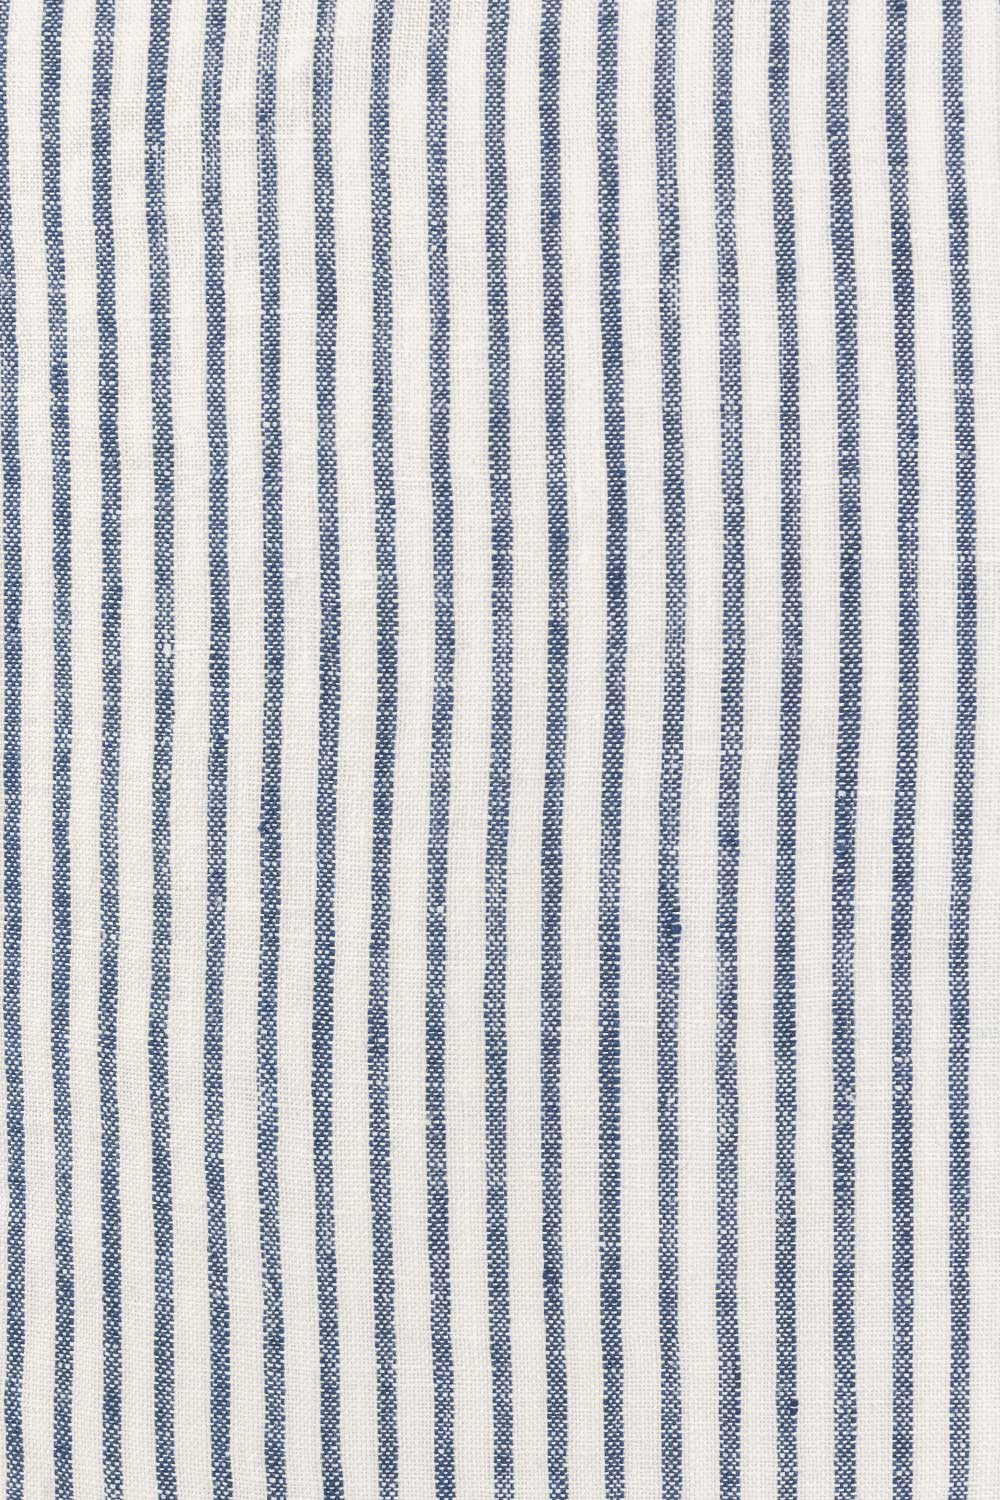 Linpute med tynne striper, Blå - Halvor Bakke Lama Interiør